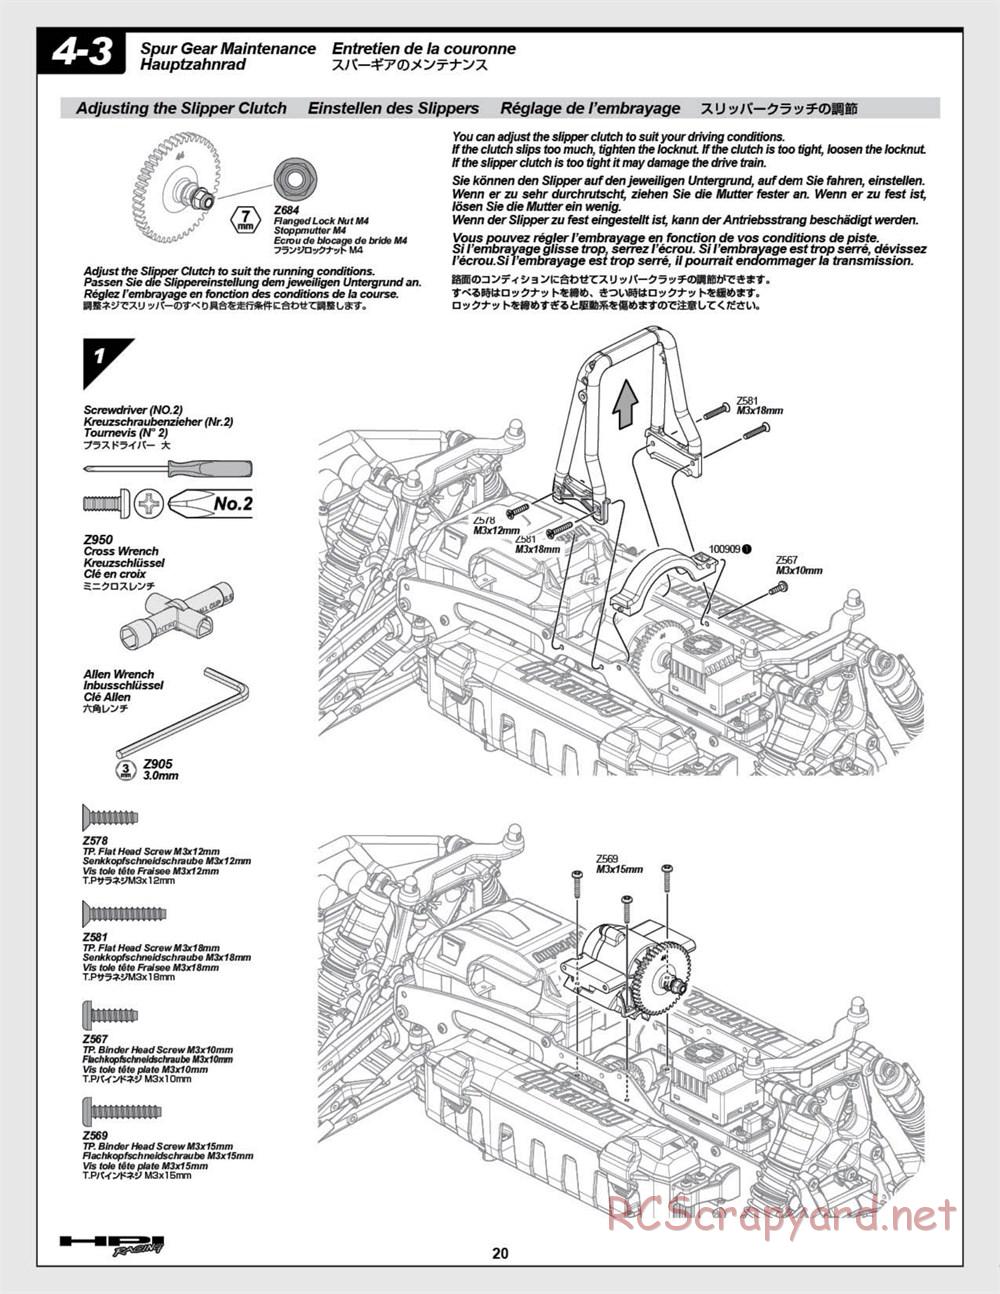 HPI - Savage Flux 2350 - Manual - Page 20